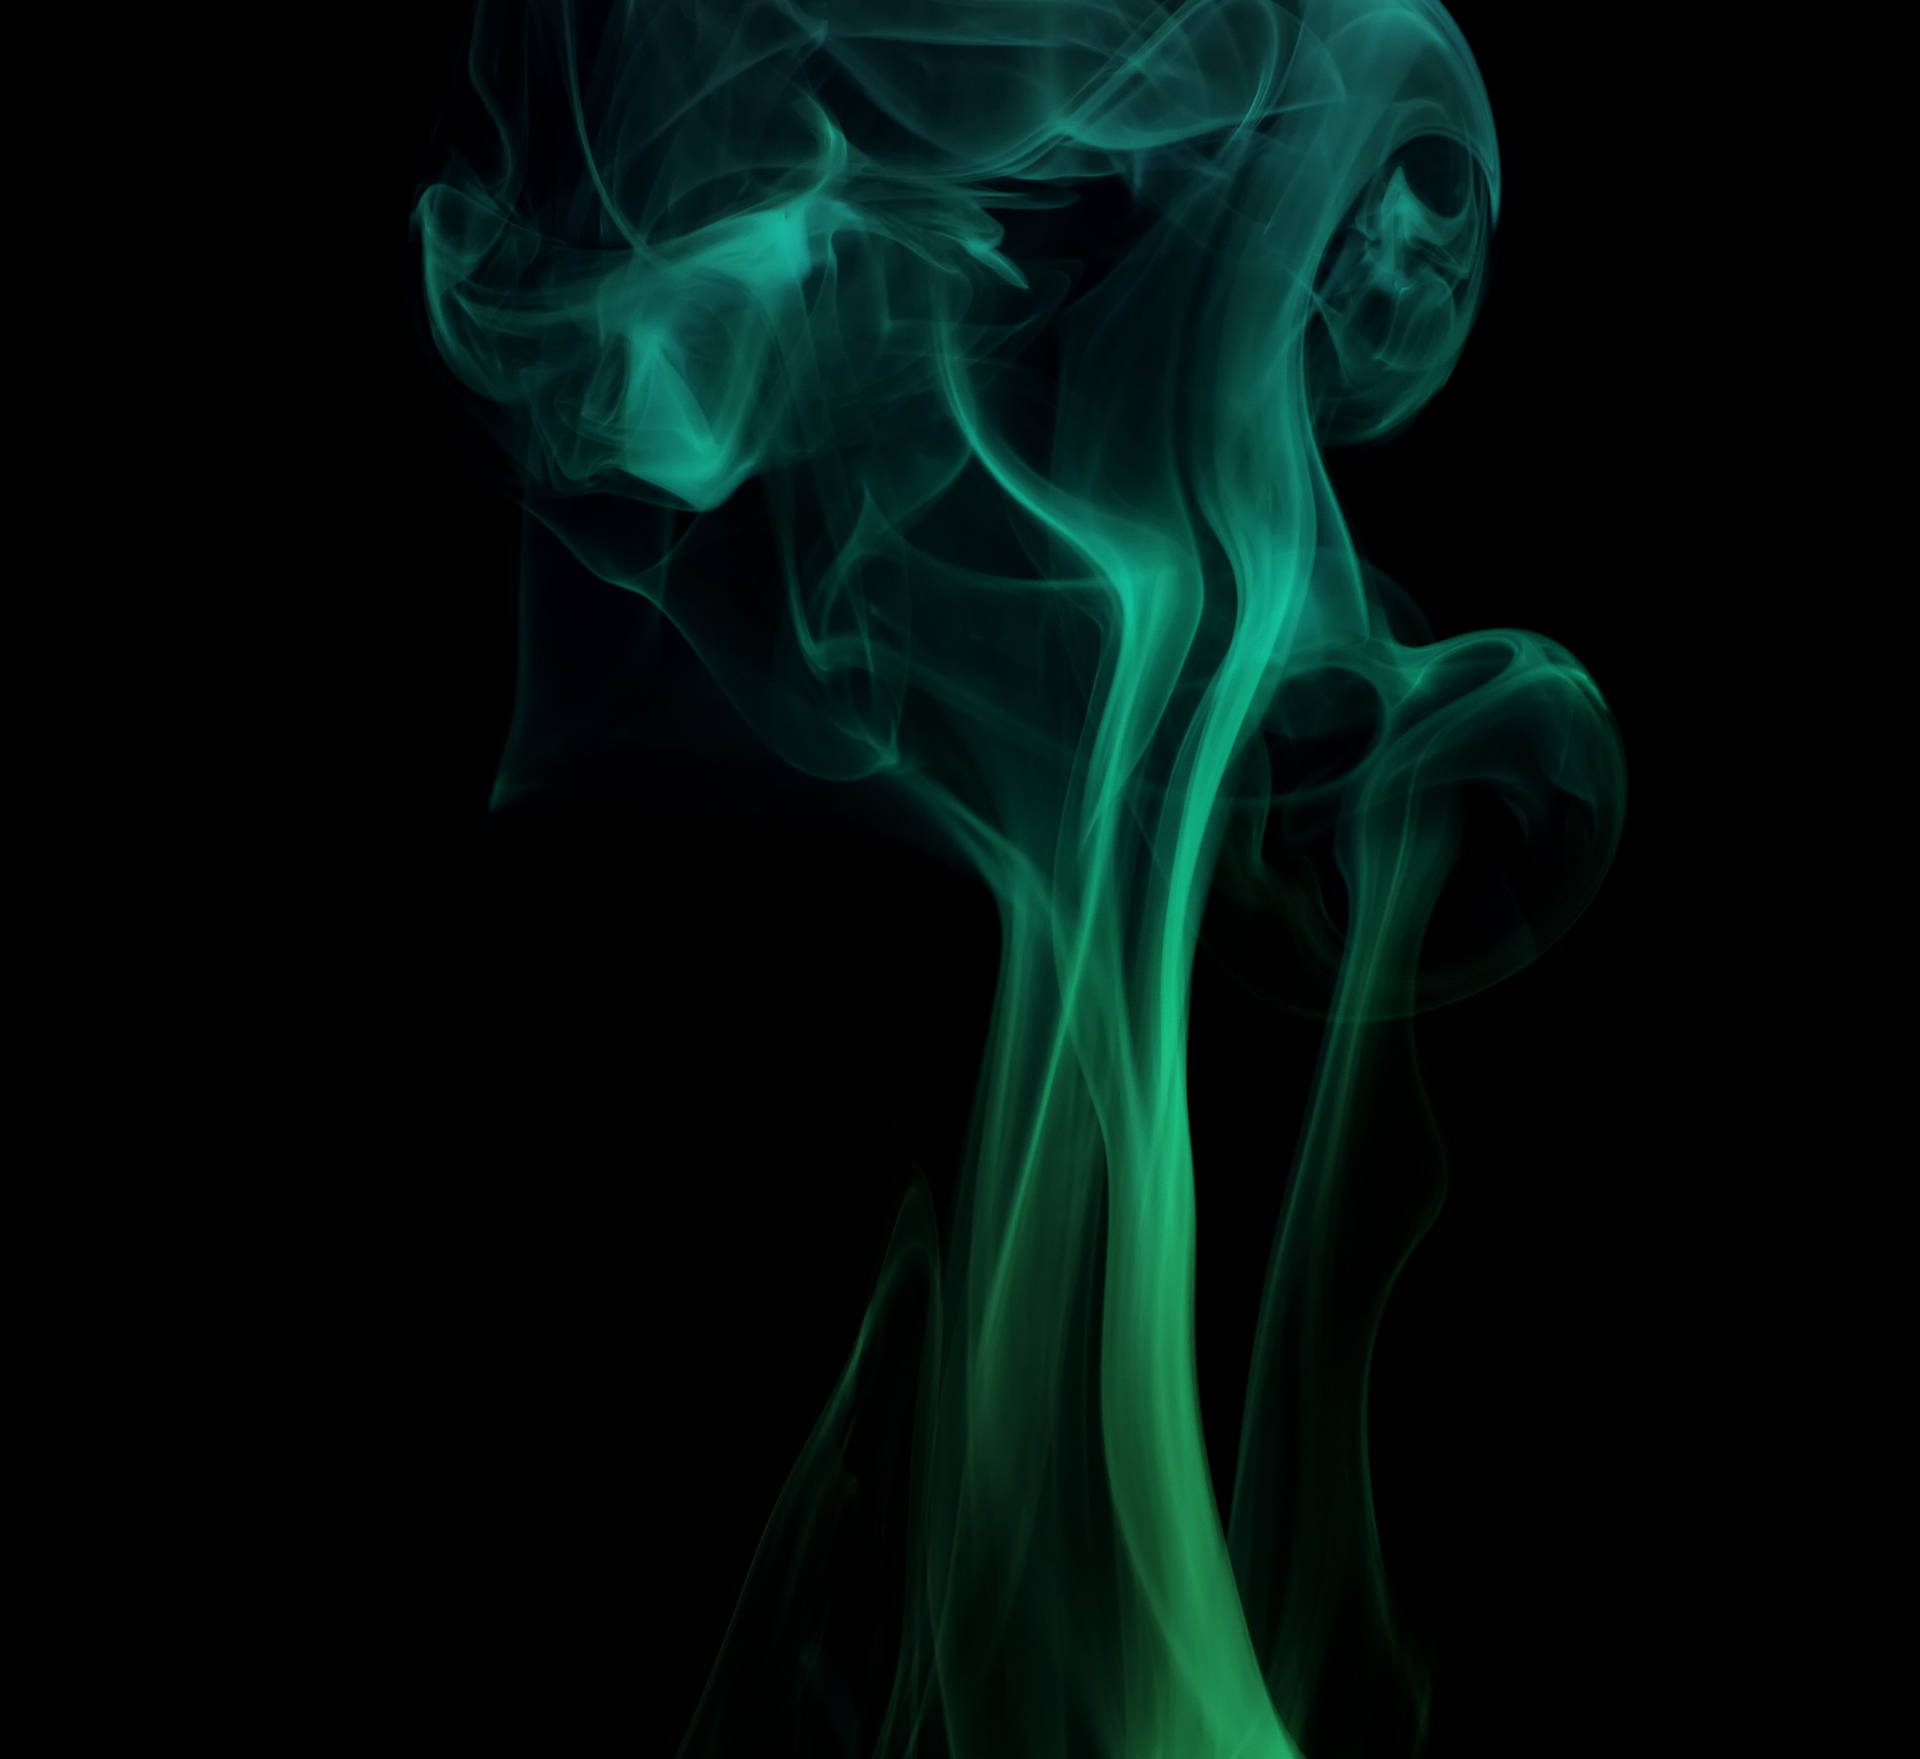 Dark Green Smoke In Black